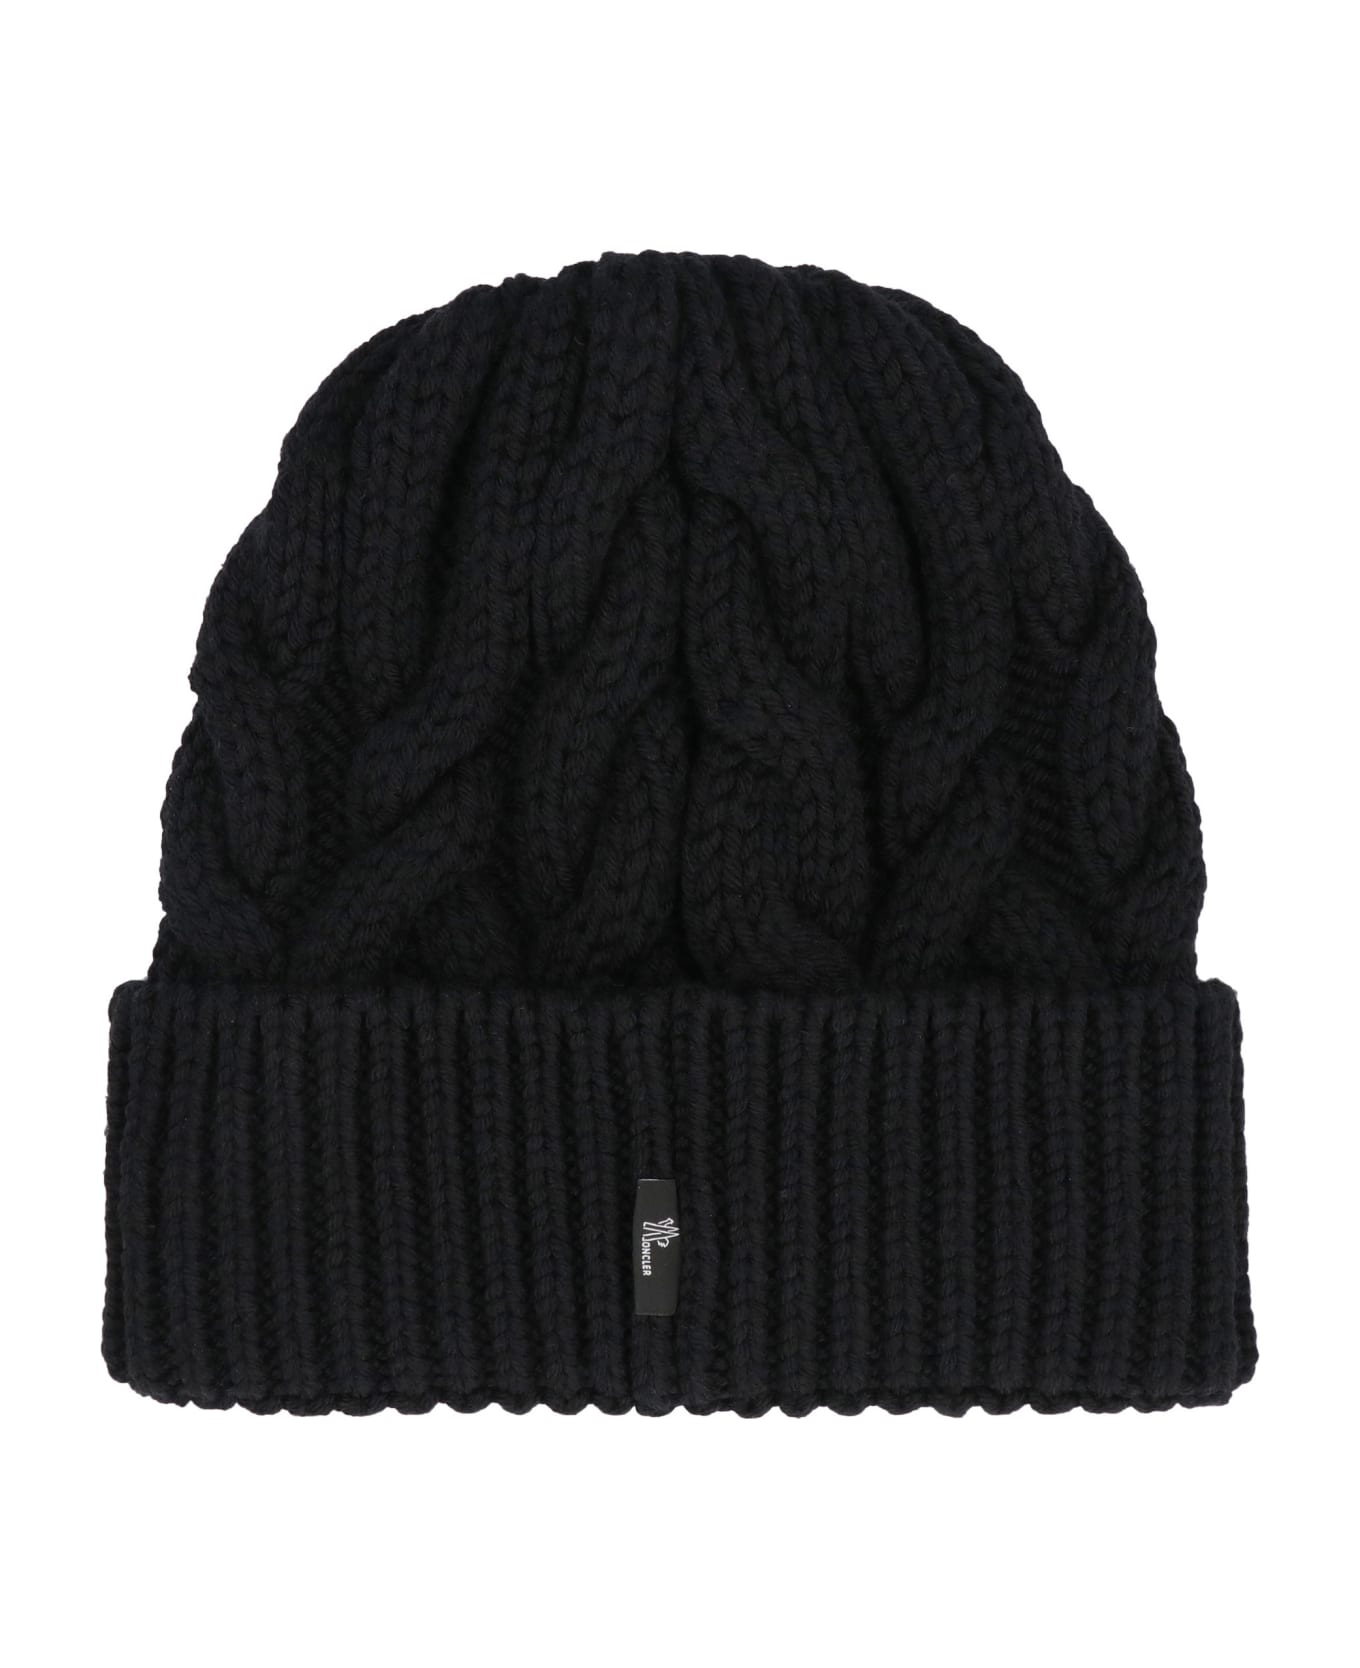 Moncler Grenoble Wool Hat - Black 帽子